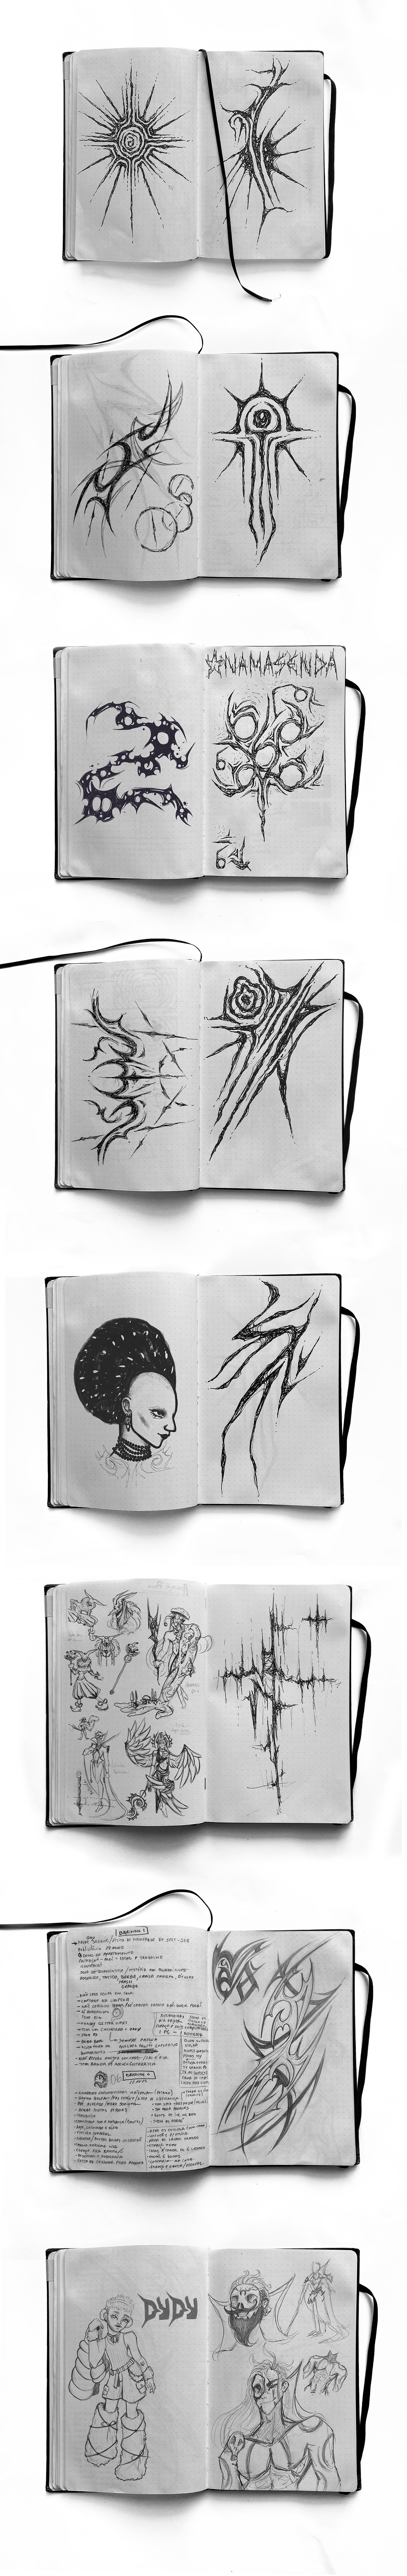 sketch sketchbook artist book experiment Drawing  art artwork ILLUSTRATION  pencil concept art